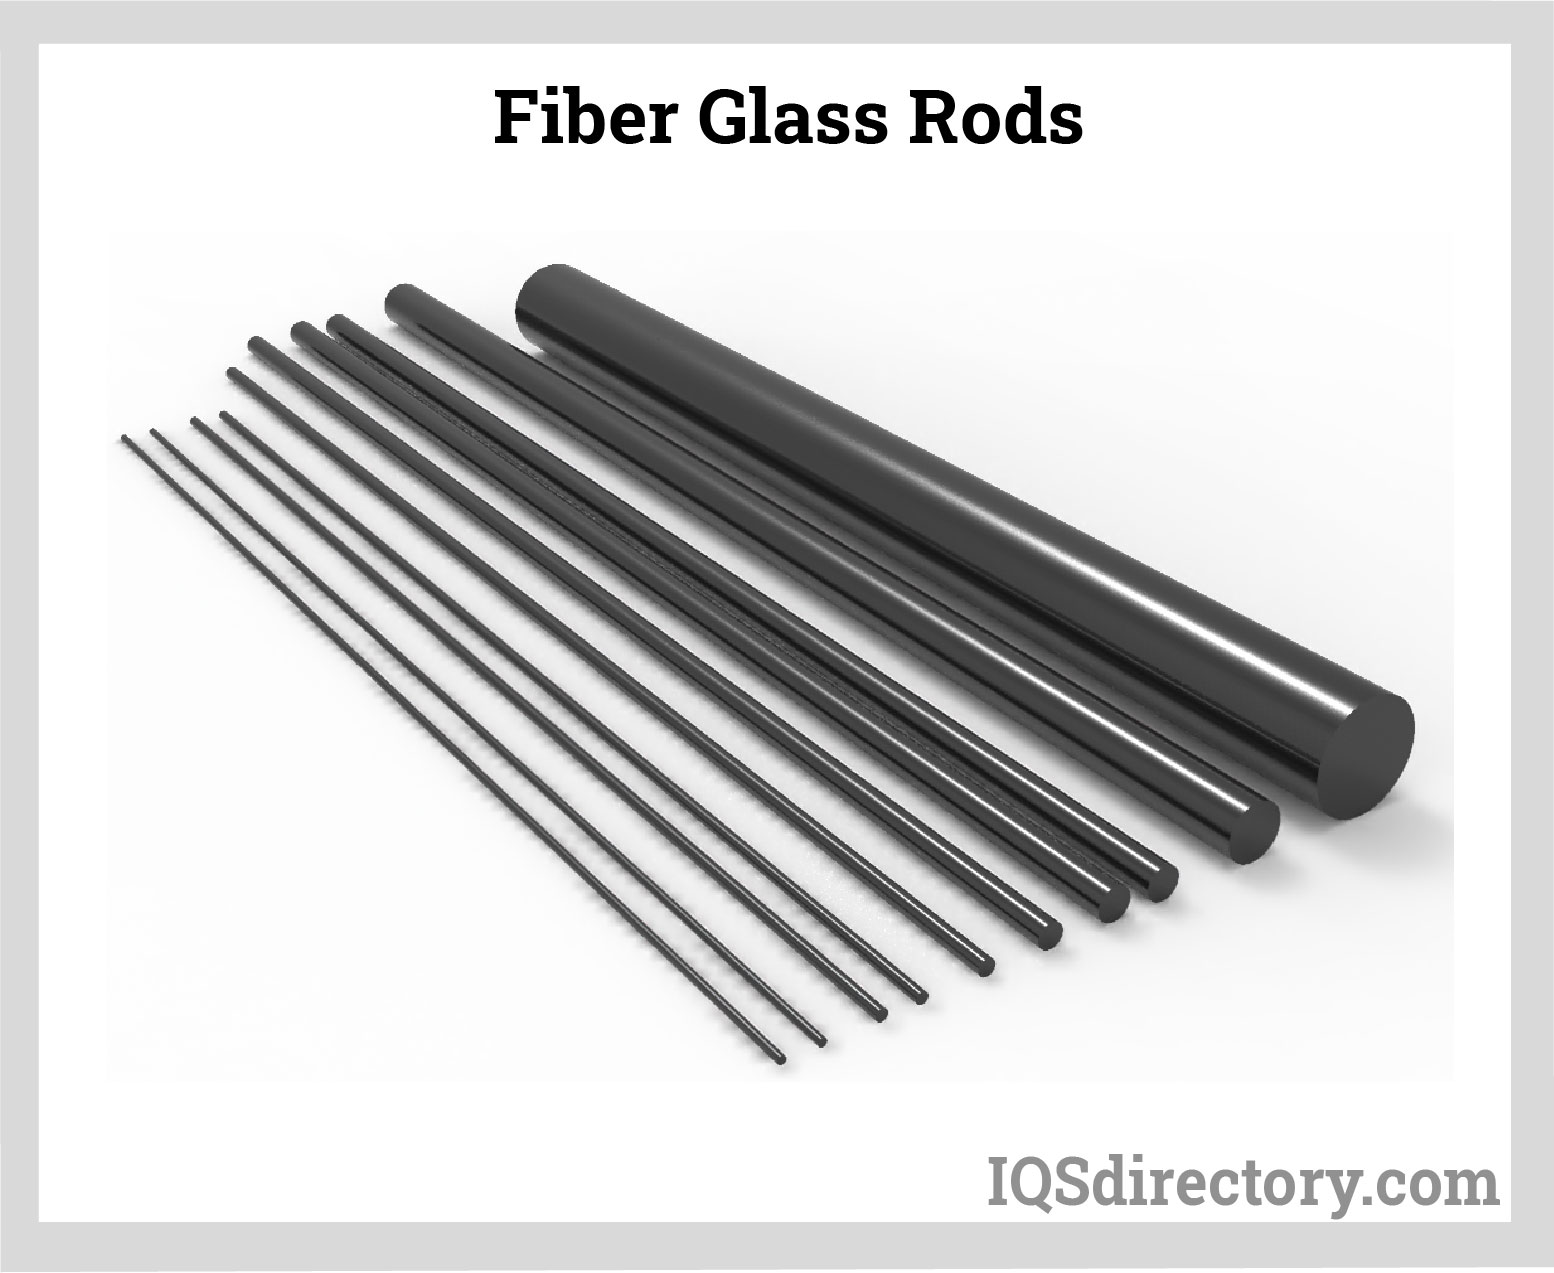 Fiber Glass Rods